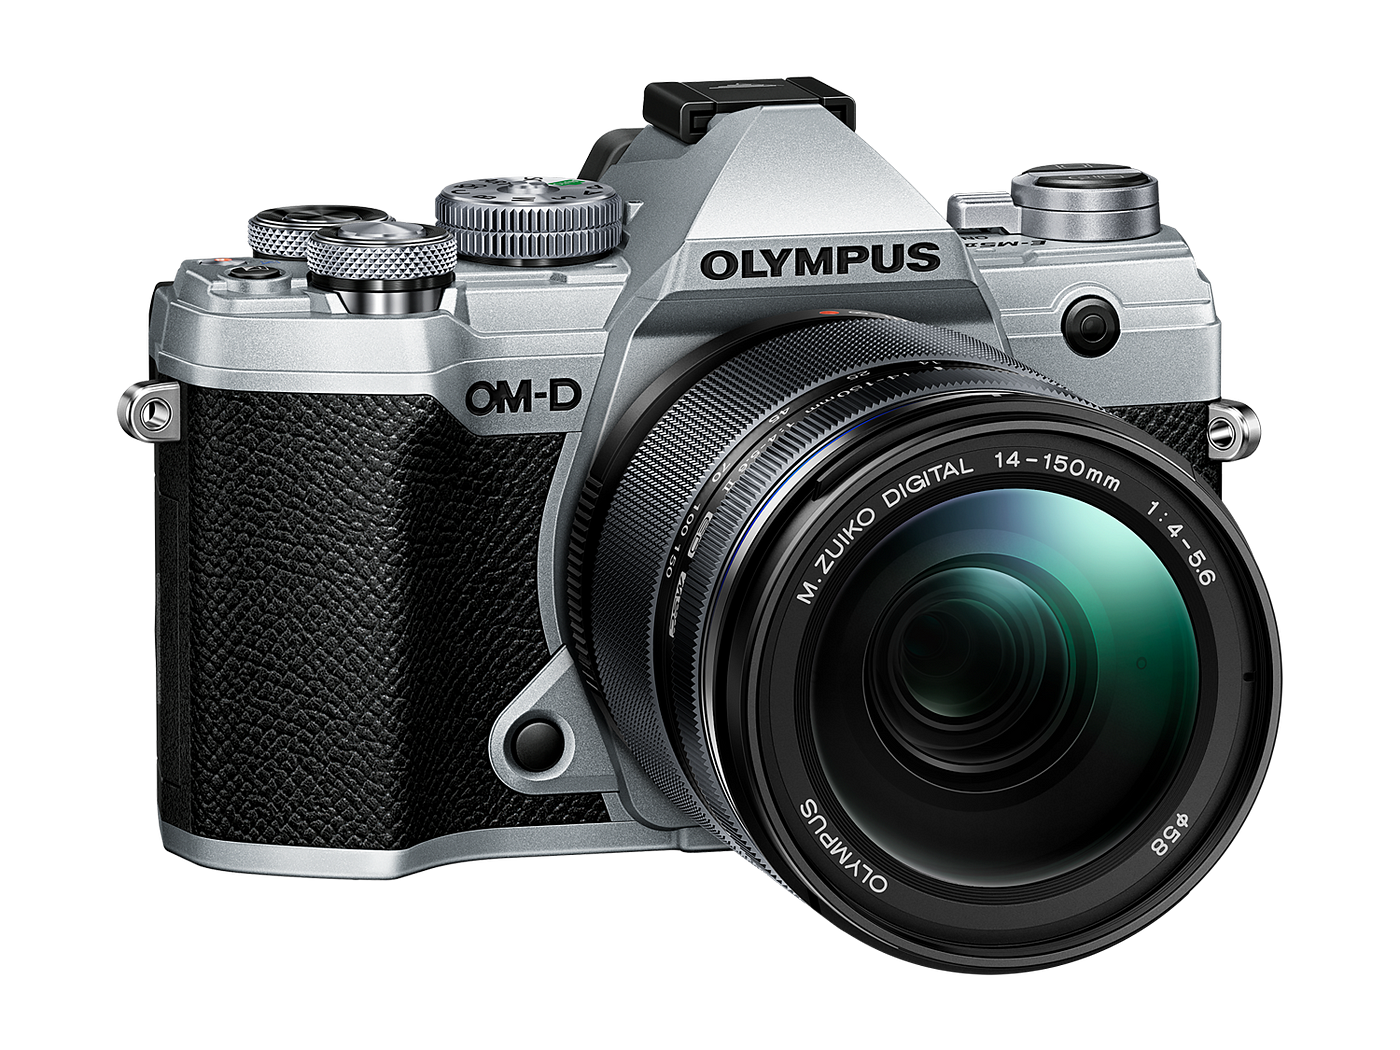 Olympus e m5 mark. Фотоаппарат Olympus om-d e-m5 Mark III Kit. Olympus m5 Mark 2. Фотоаппарат Olympus om-d e-m5 Mark II Kit. Olympus om-d e-m5 body.